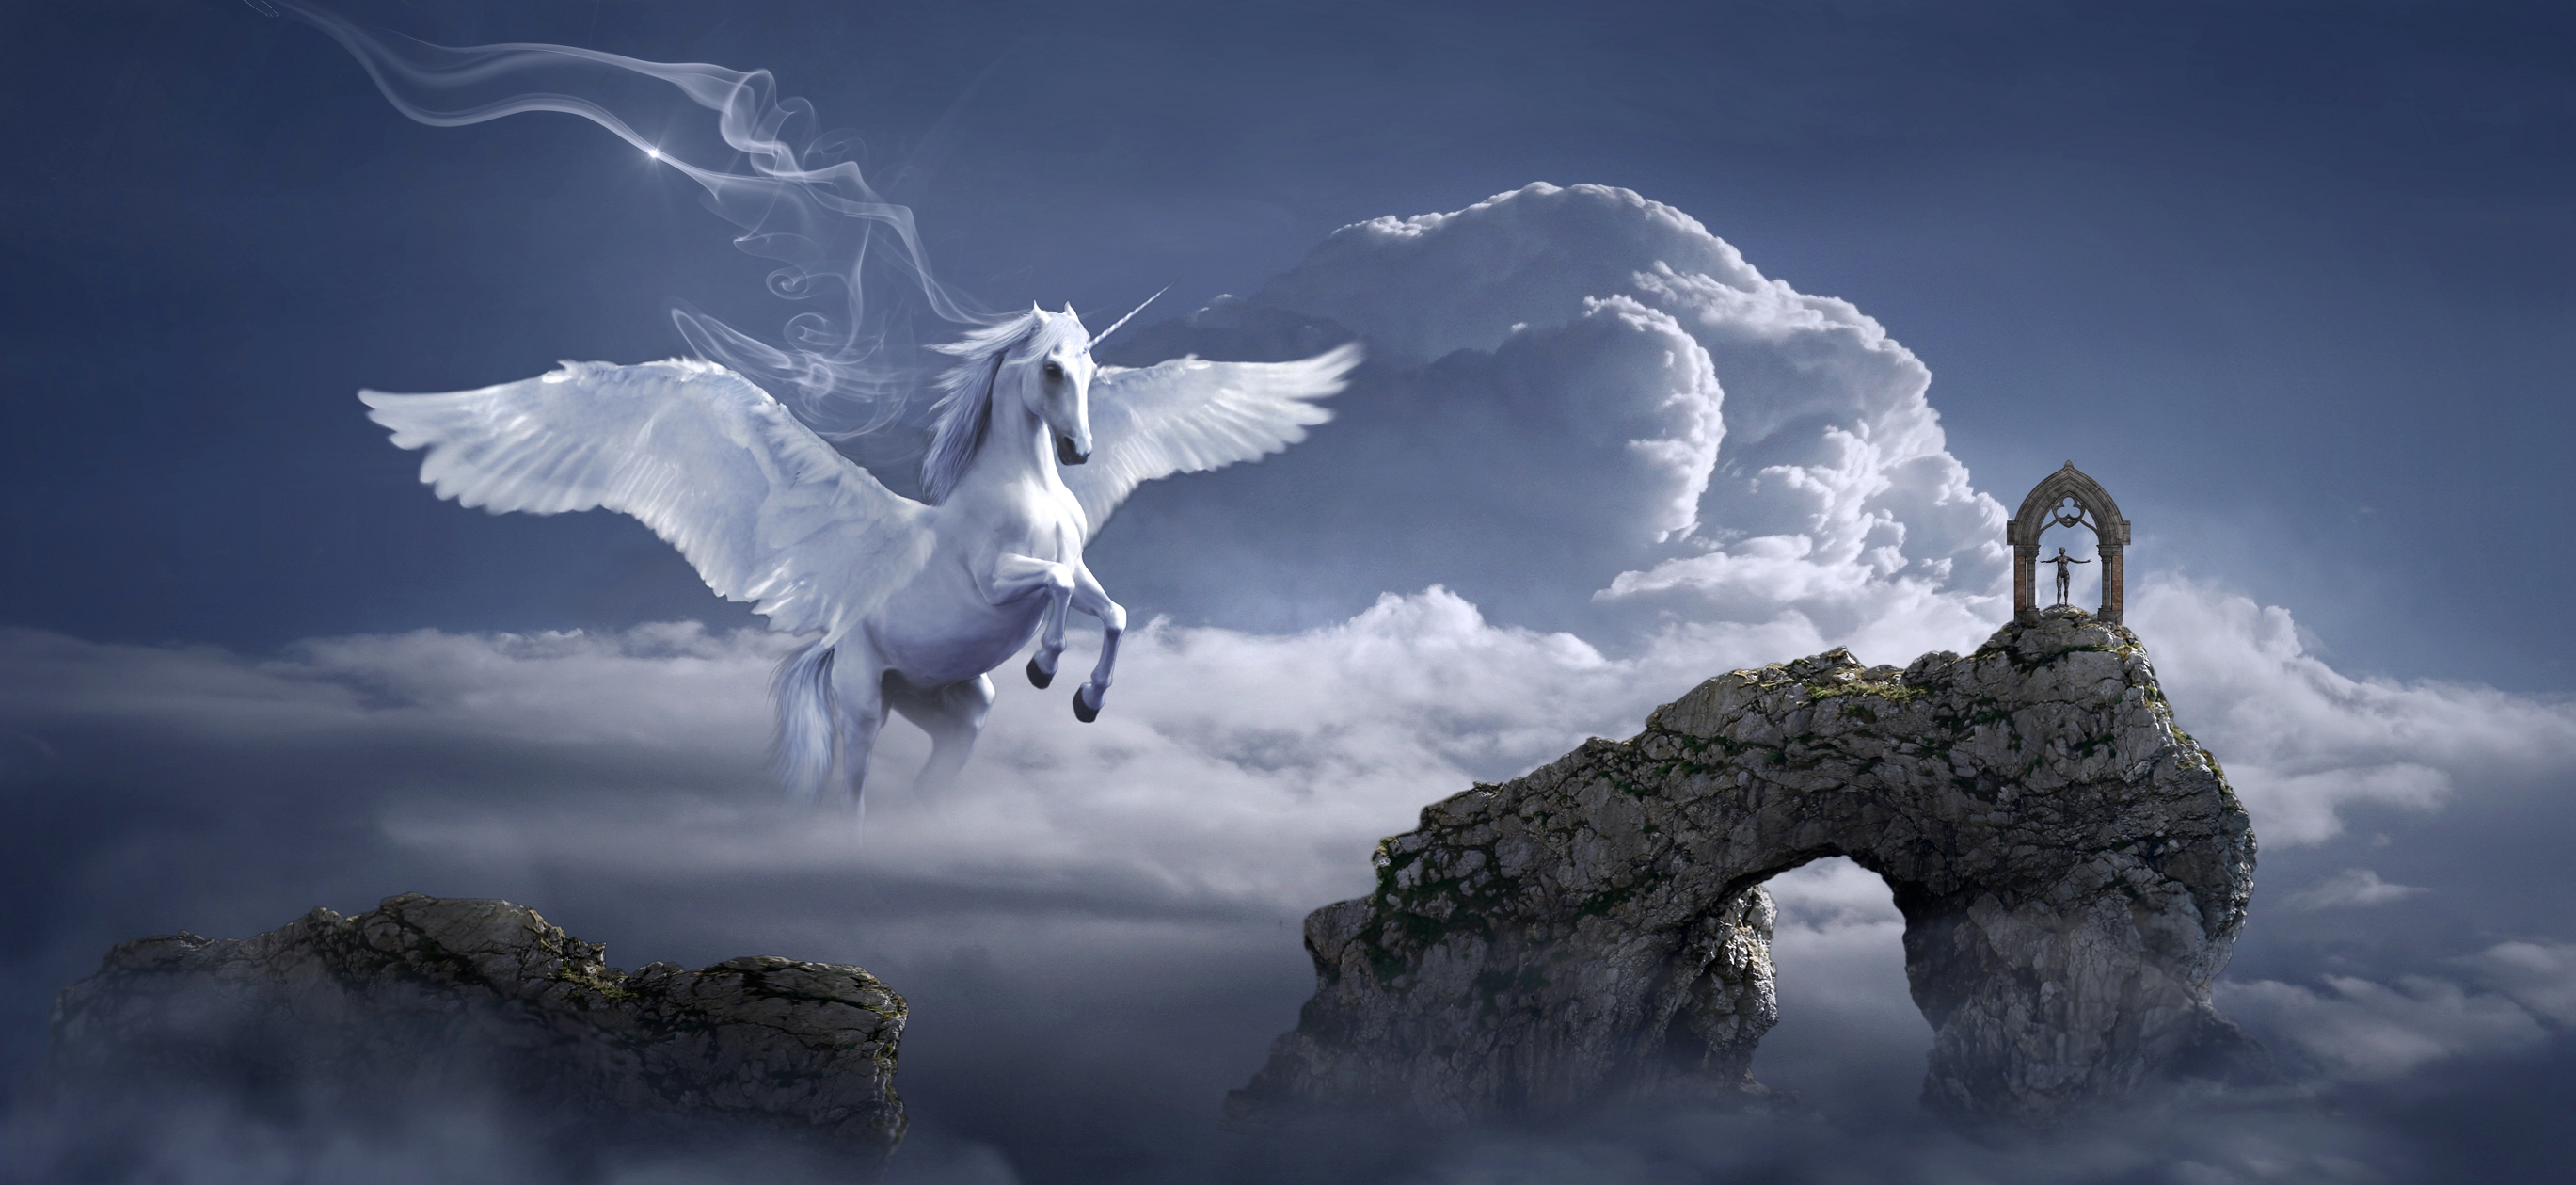 Pegasus Unicorn Hd Wallpaper Background Image 2738x1259 Id 927422 Wallpaper Abyss